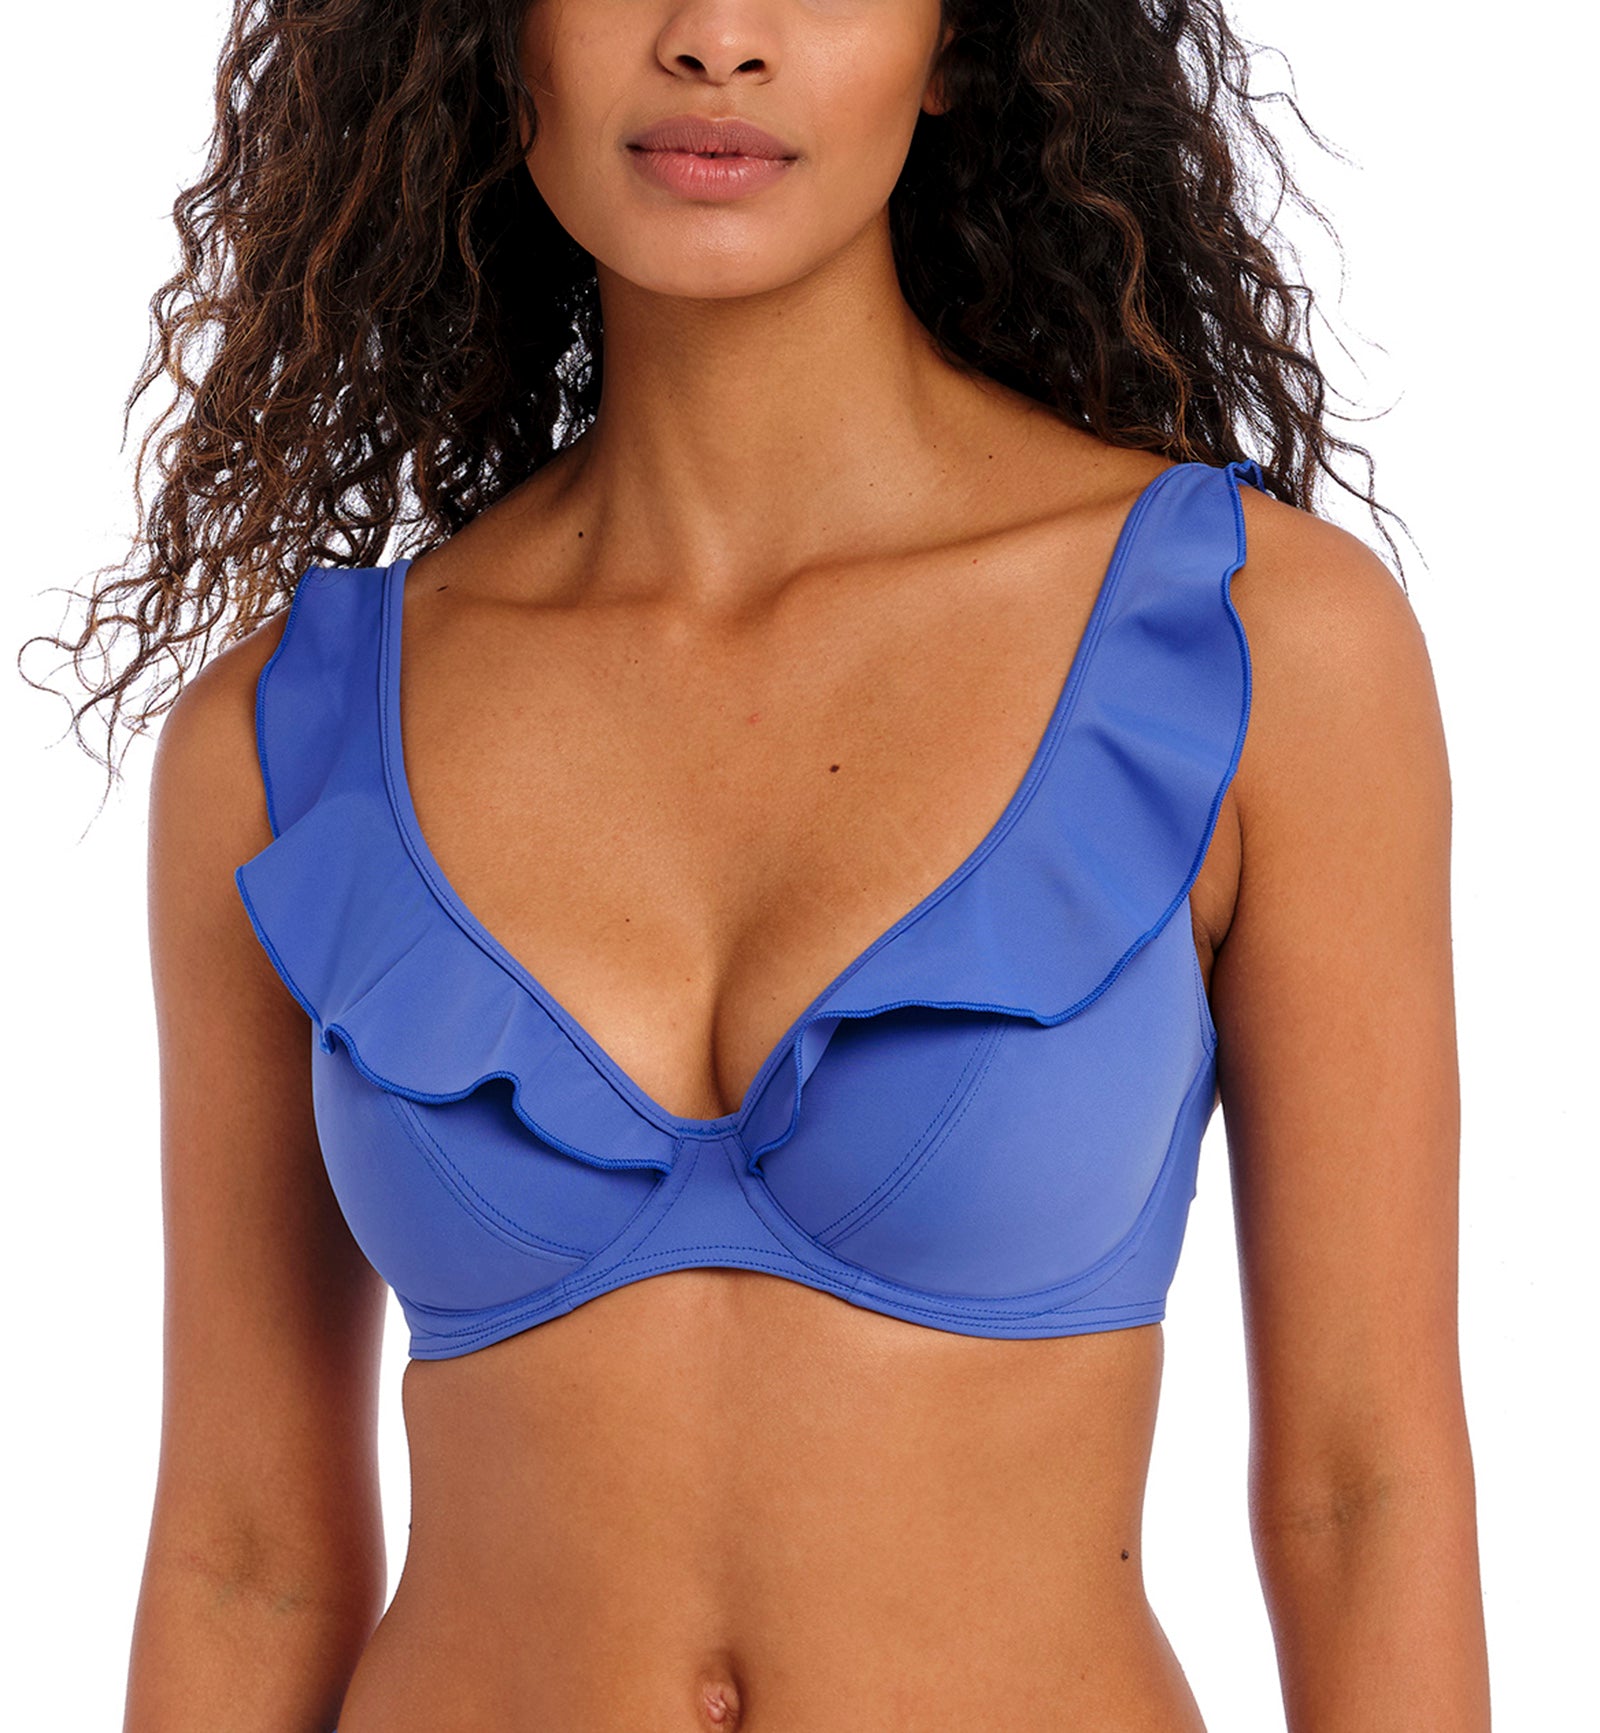 Freya Jewel Cove High Apex Underwire Bikini Top with J Hook (7230),28FF,Plain Azure - Plain Azure,28FF